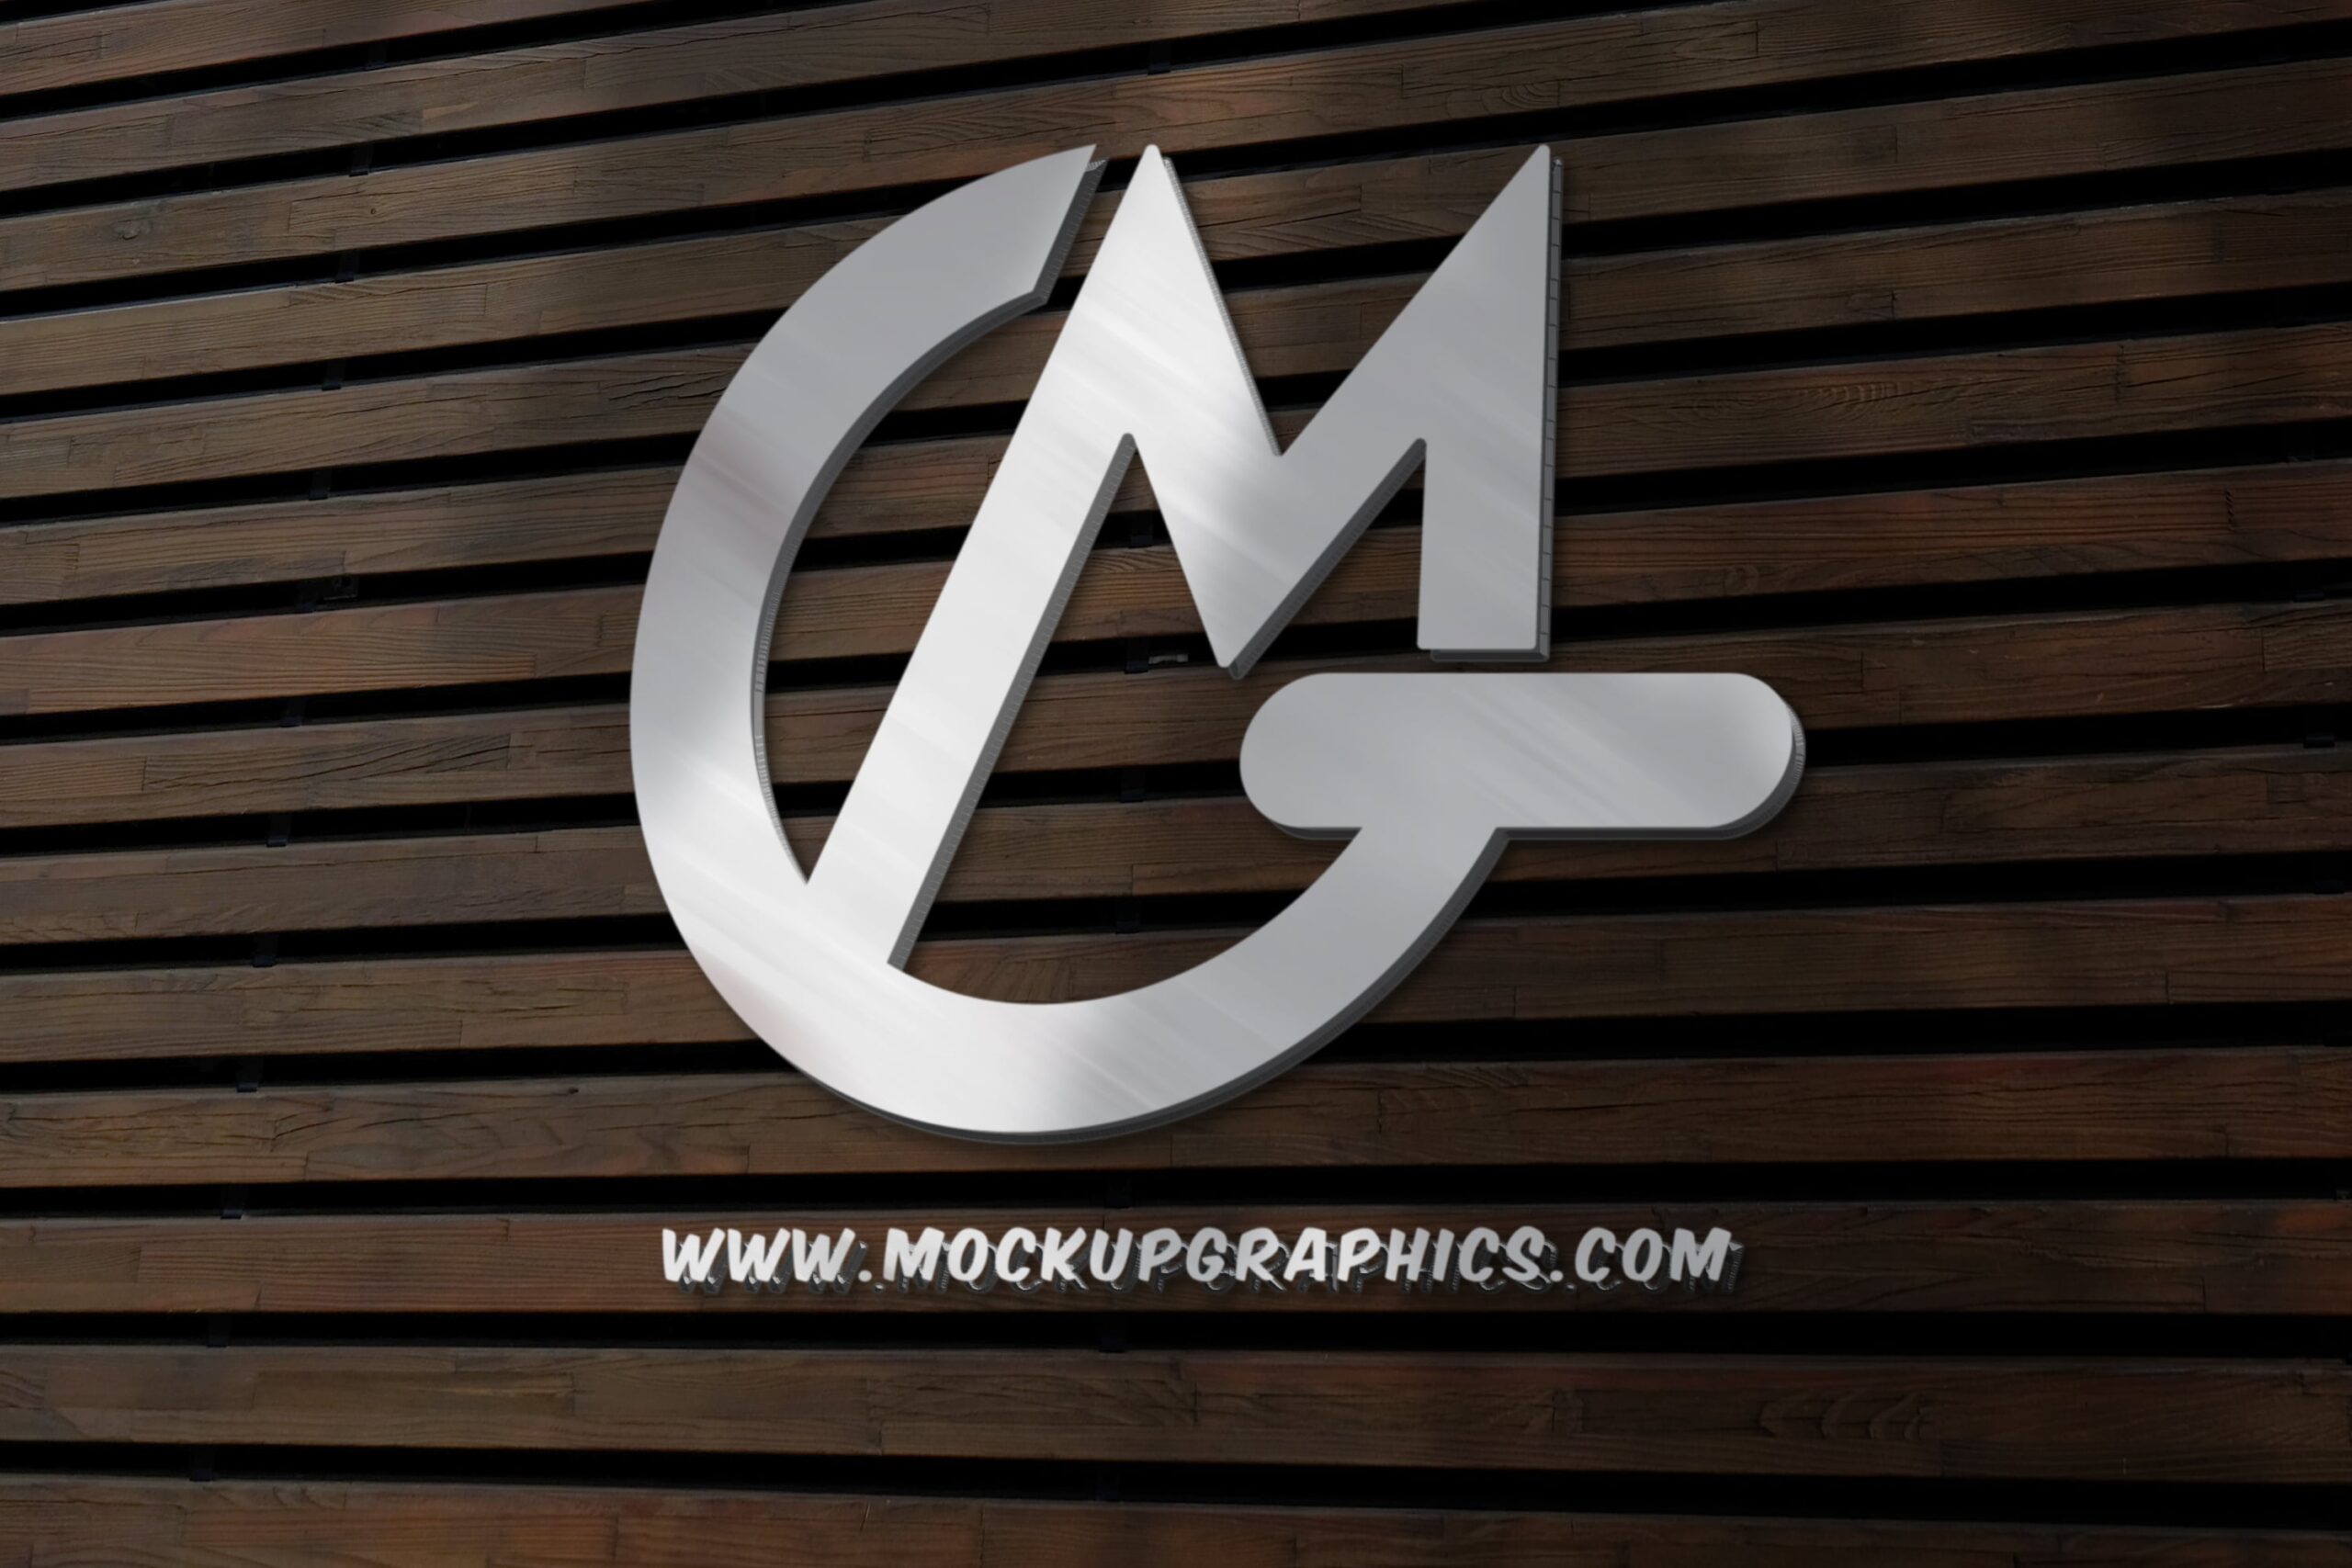 Wall_ Logo_ Mockup_Design_www.mockupgraphics.com